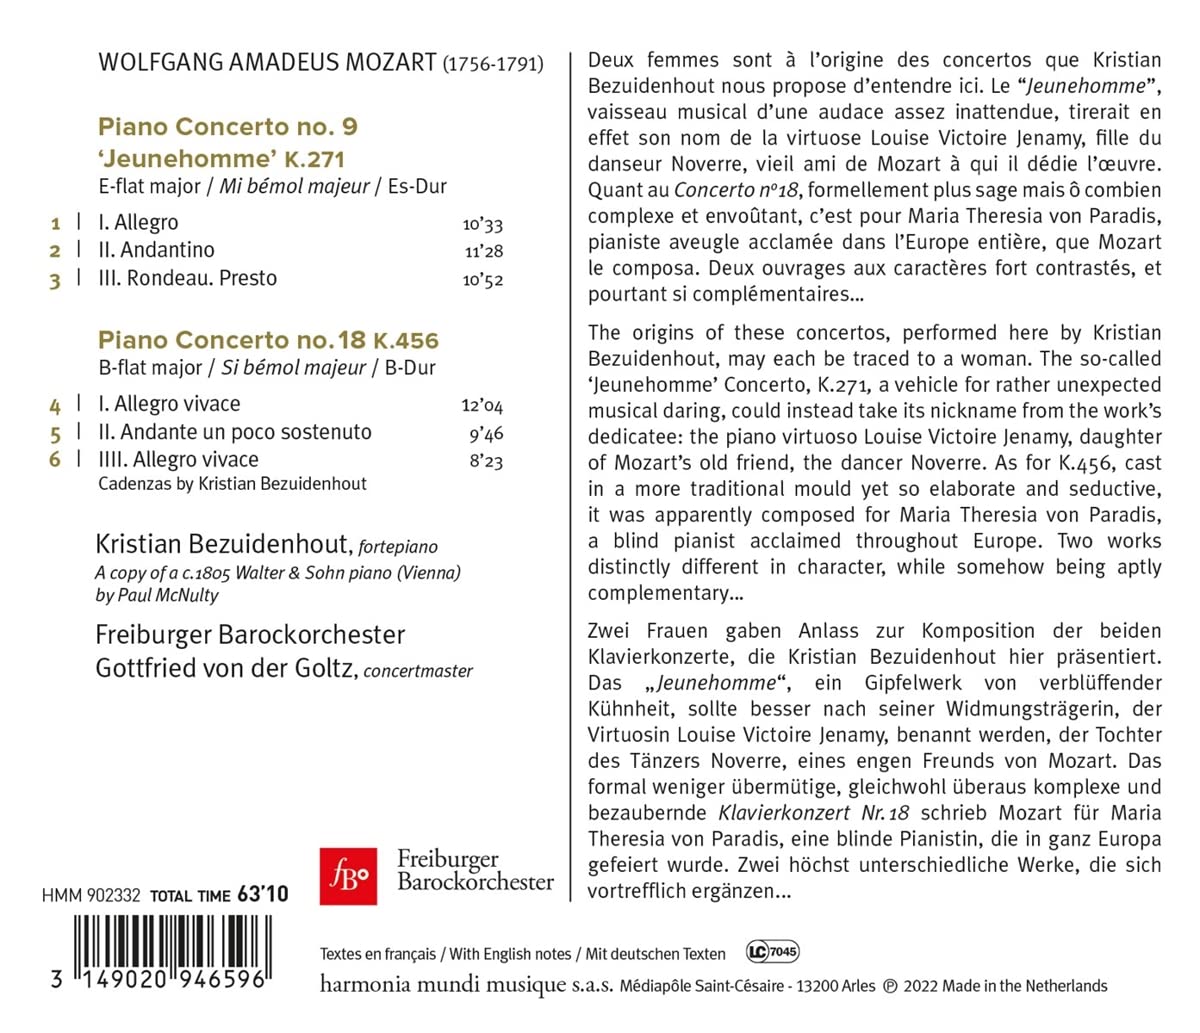 Mozart: Piano Concertos K. 271 & 456 - Kristian Bezuidenhout, Freiburger Barockorchester